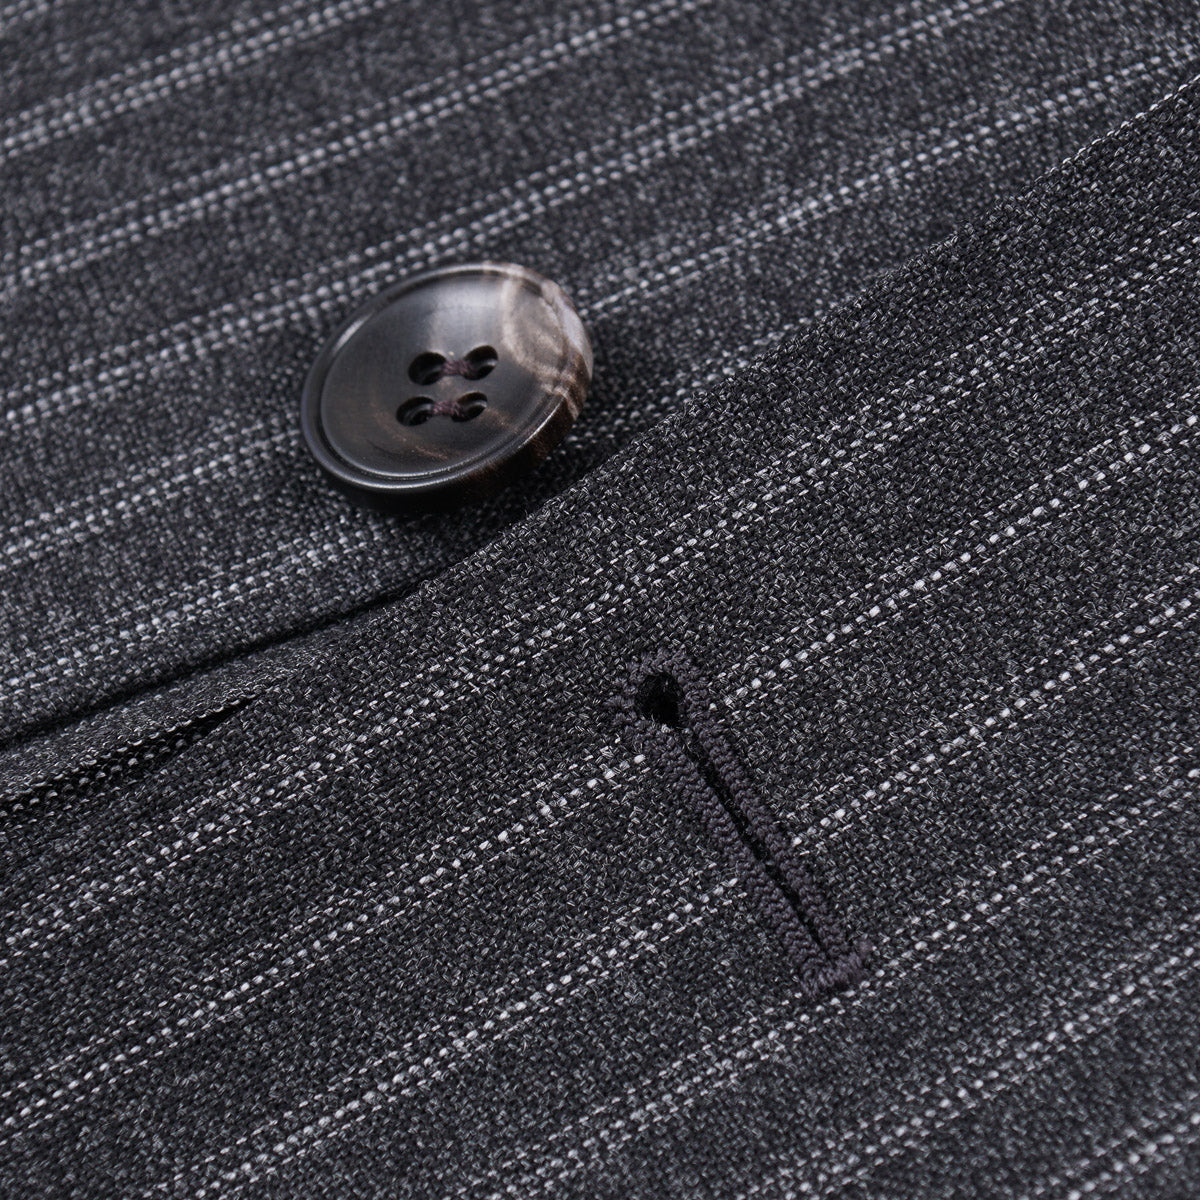 Sartorio Slim-Fit Crisp Wool Suit - Top Shelf Apparel